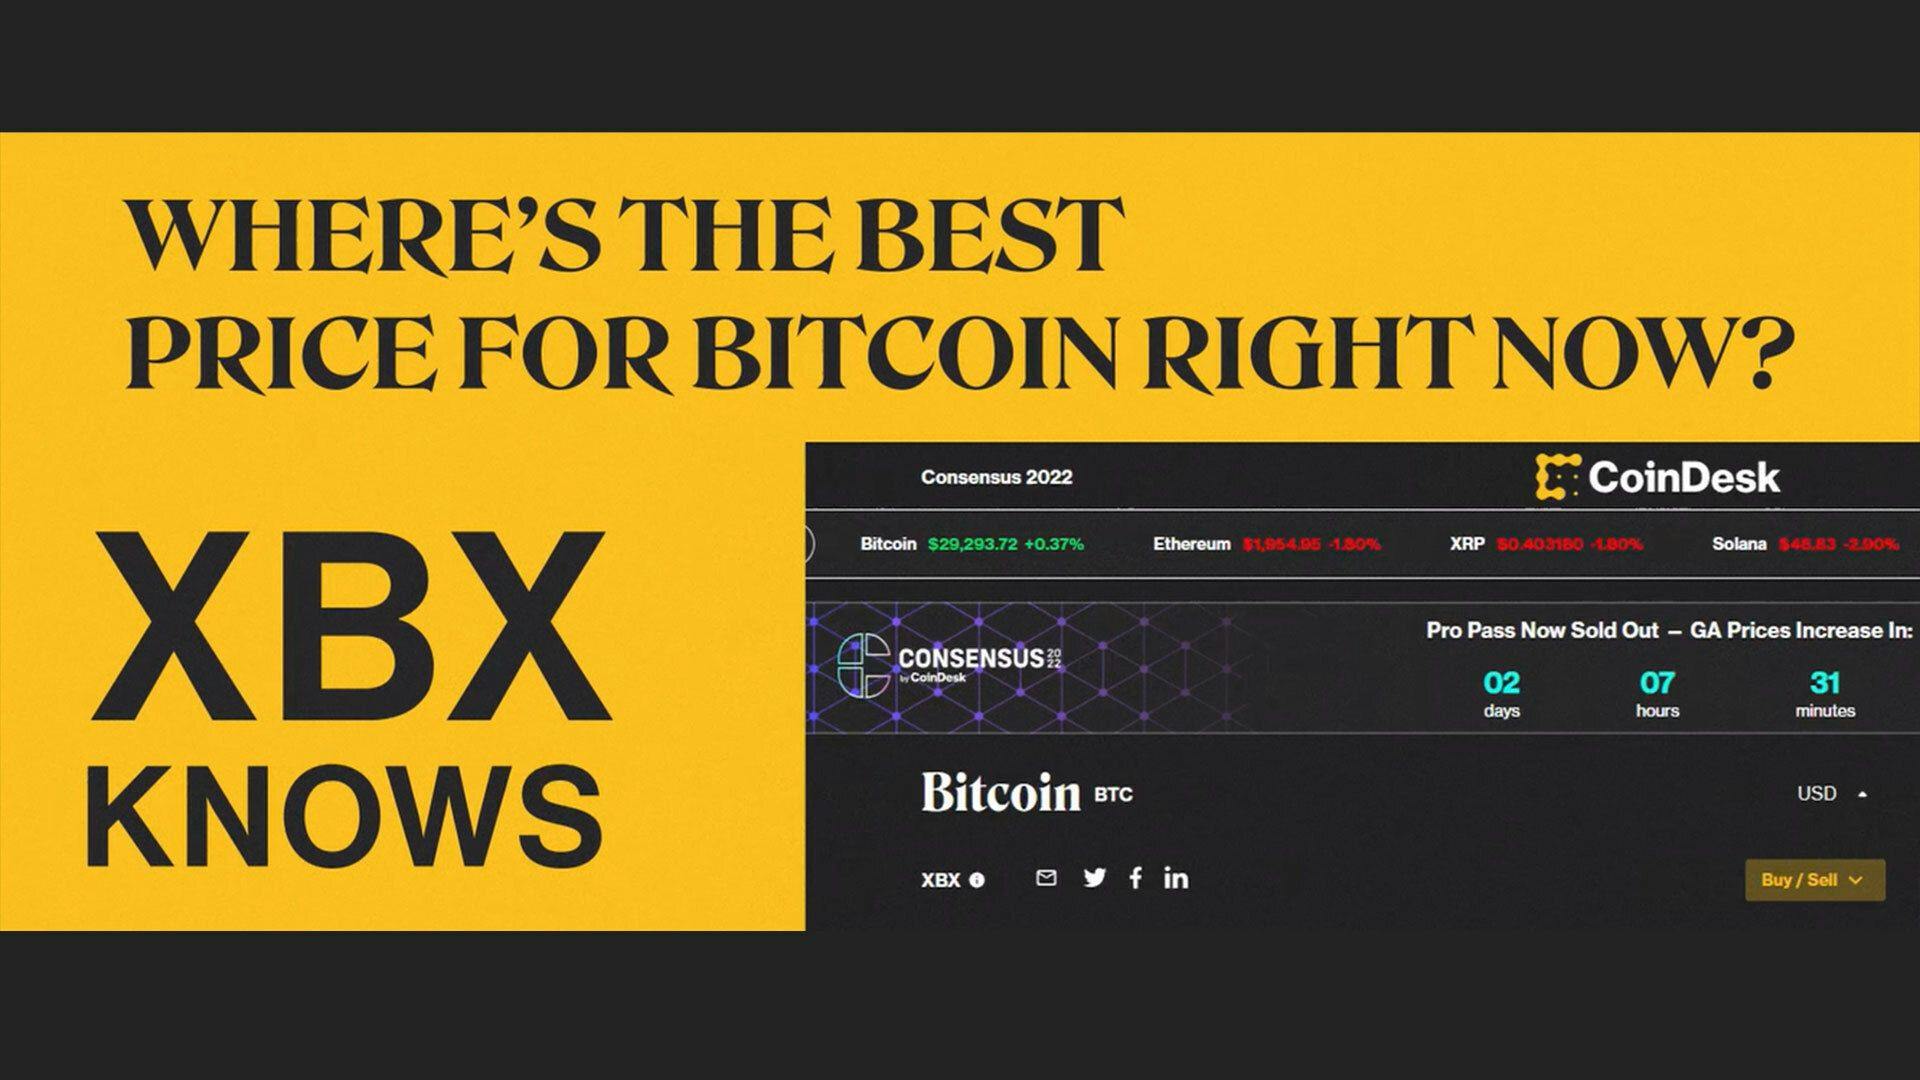 XBX: The Bitcoin Price Index's image